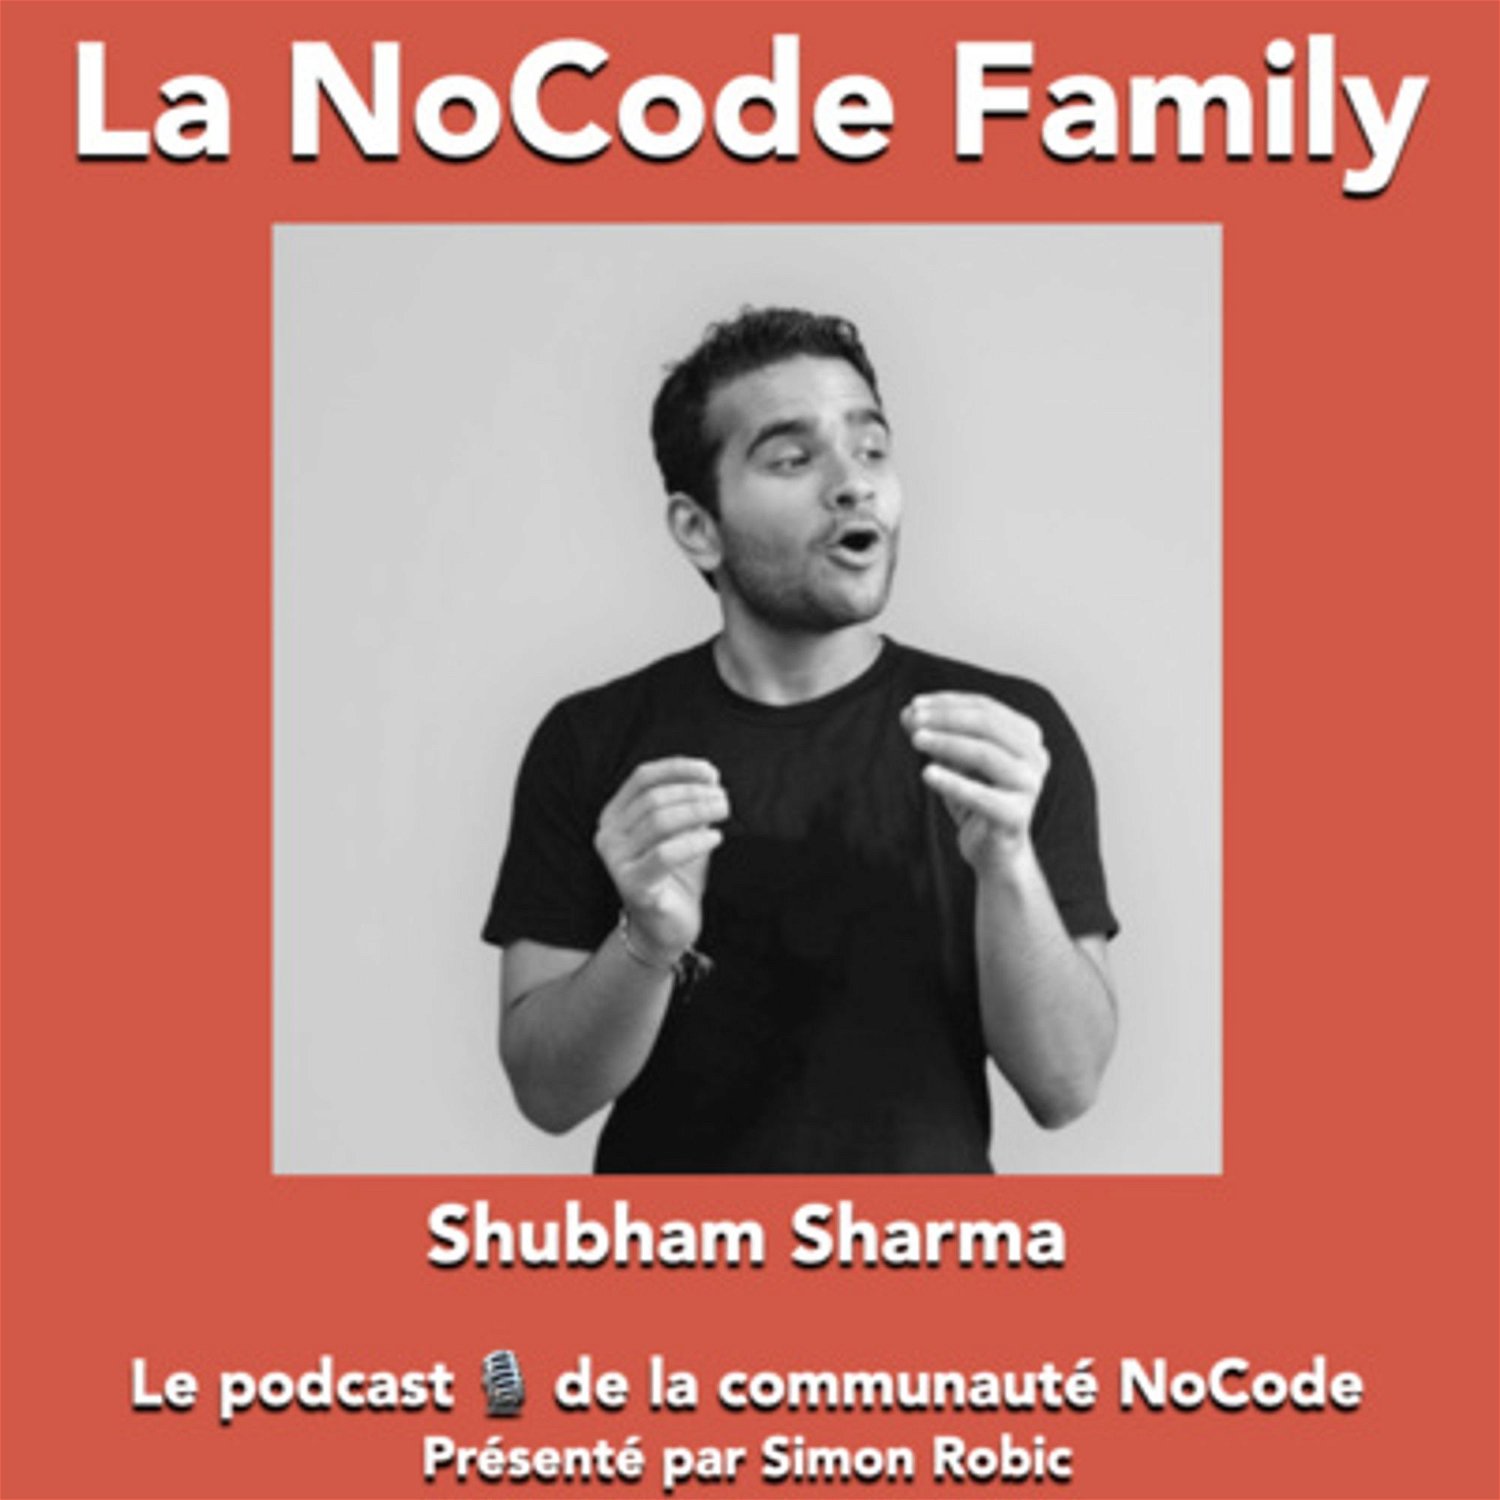 NoCode Family #15 - Discuter avec sa cible pour comprendre son besoin, avec Shubham Sharma de Digital Wink by La NoCode Family